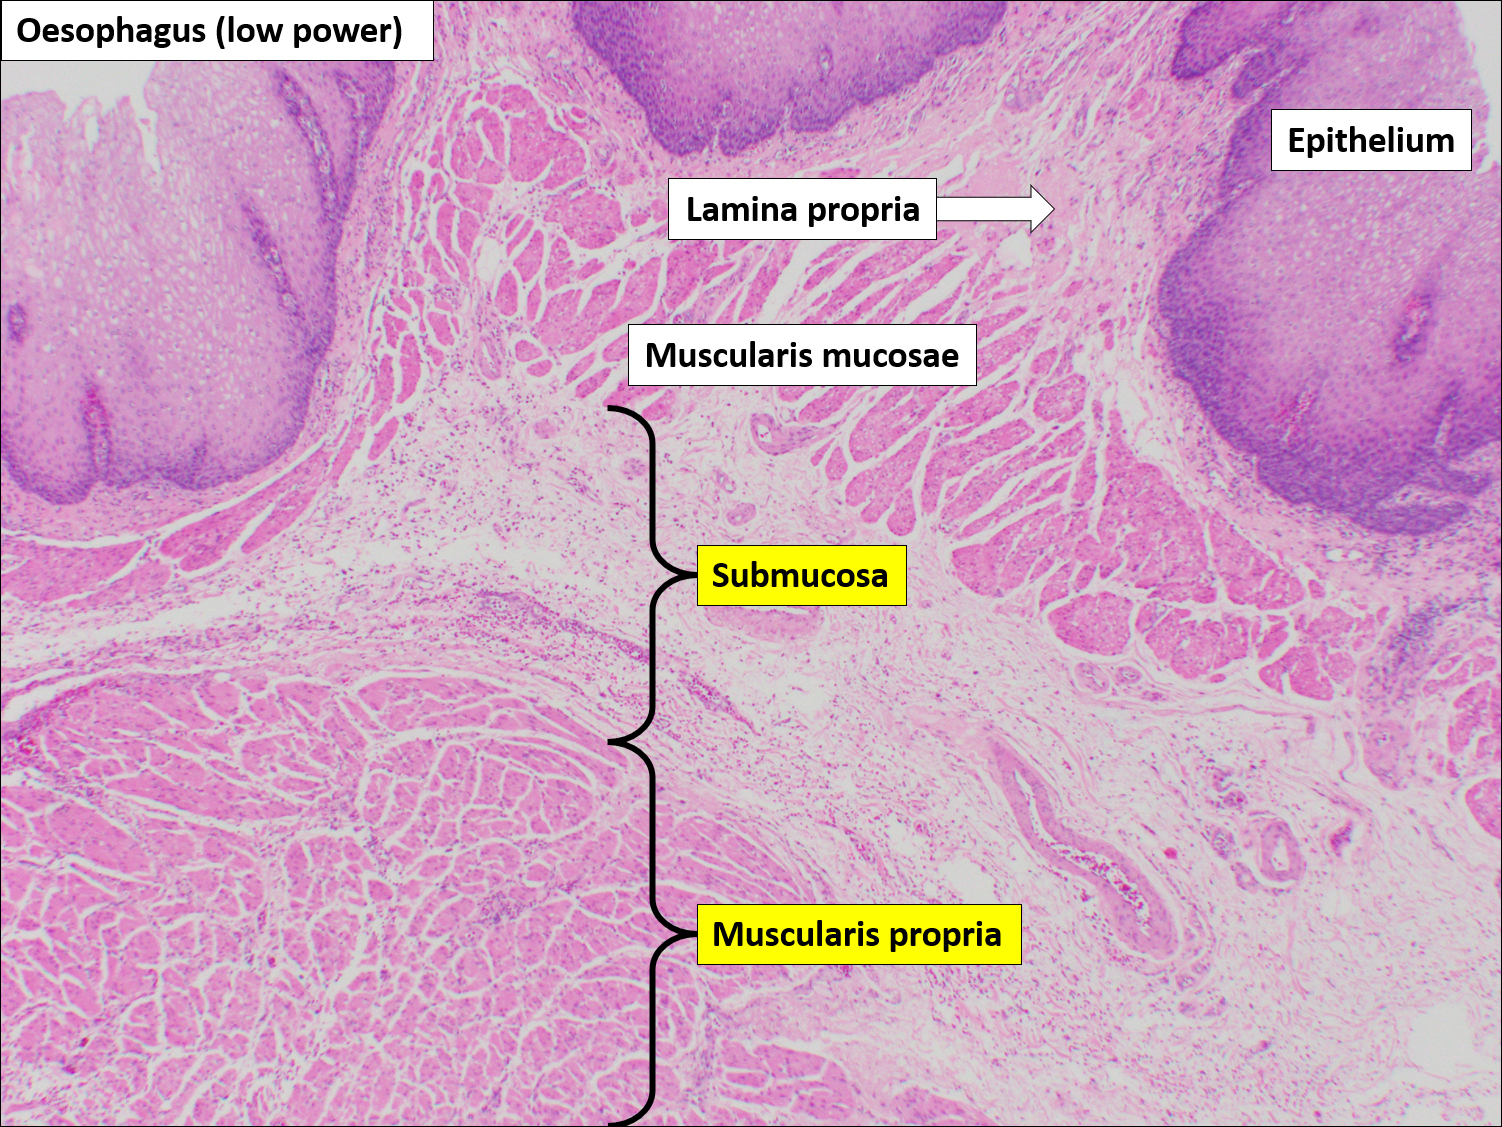 Esophagus Histology Diagram